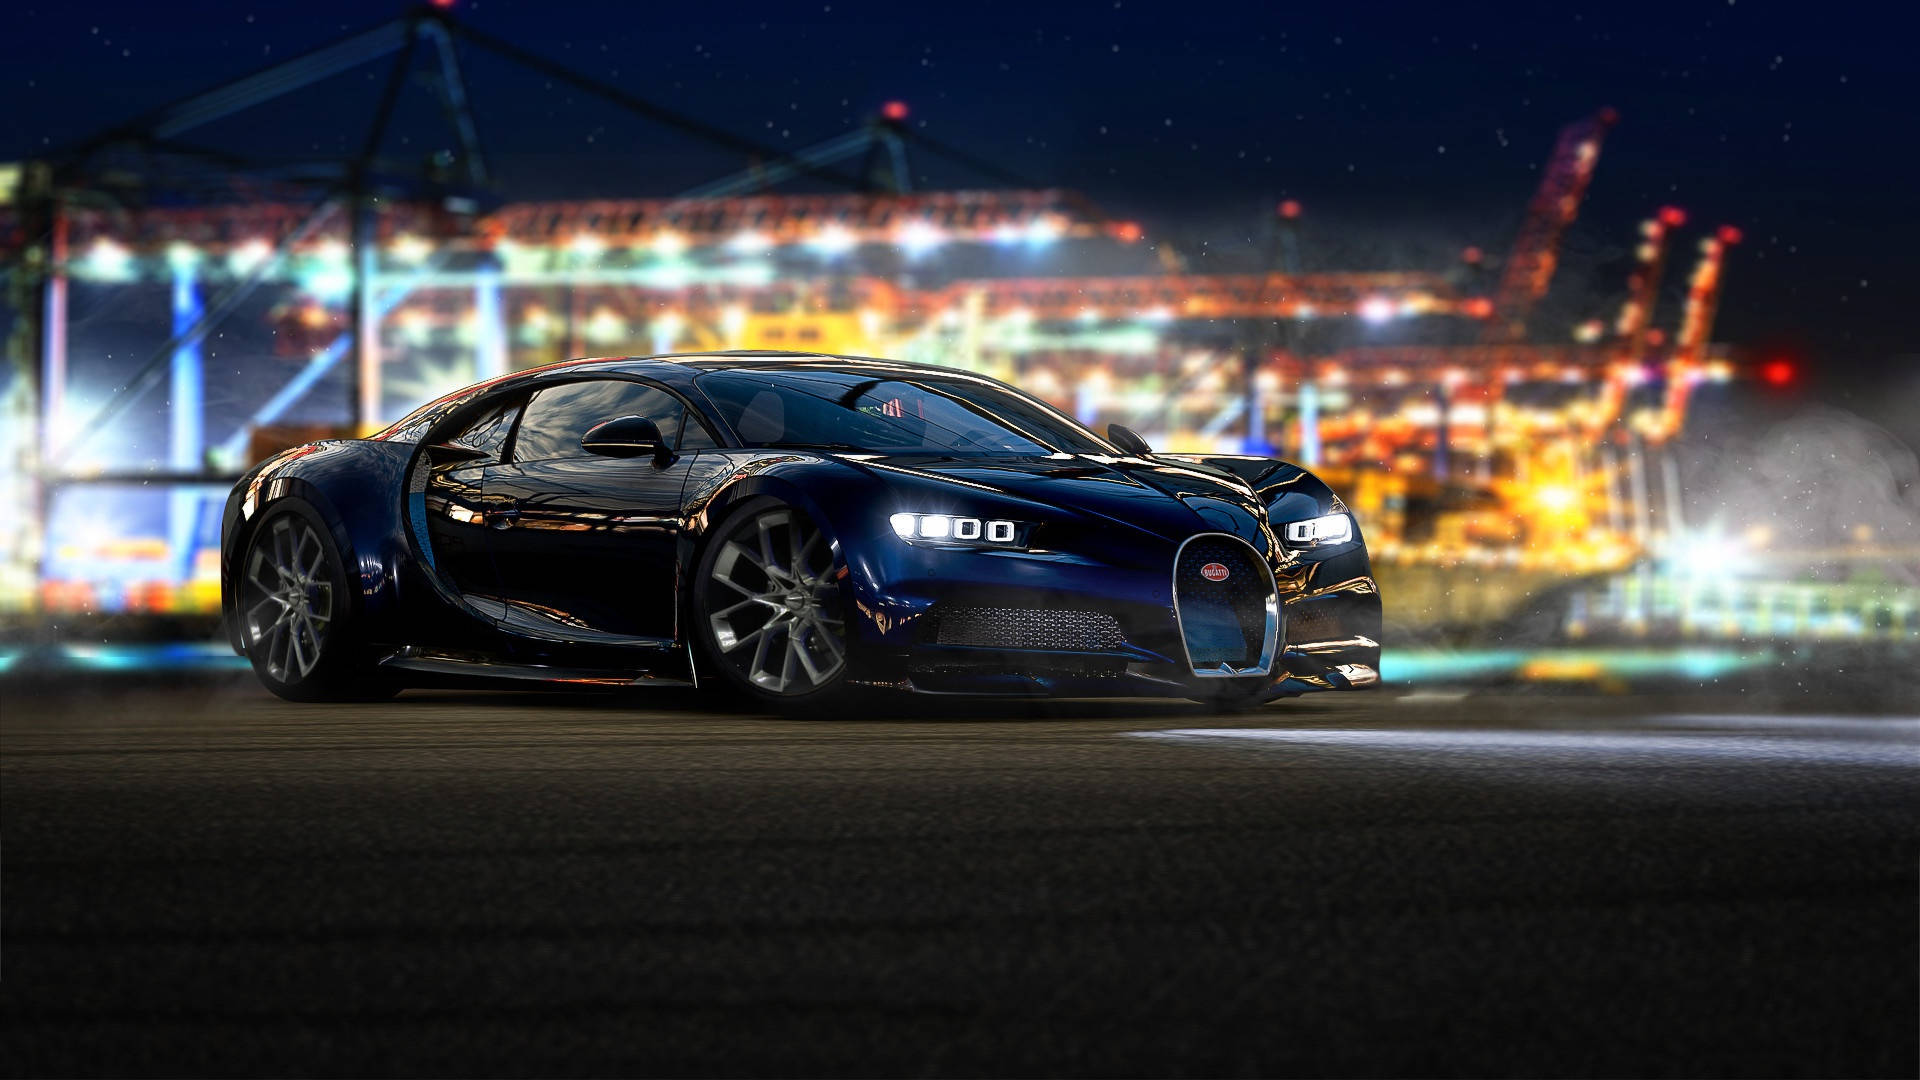 Stunning Black Bugatti Chiron In Forza Motorsport 7